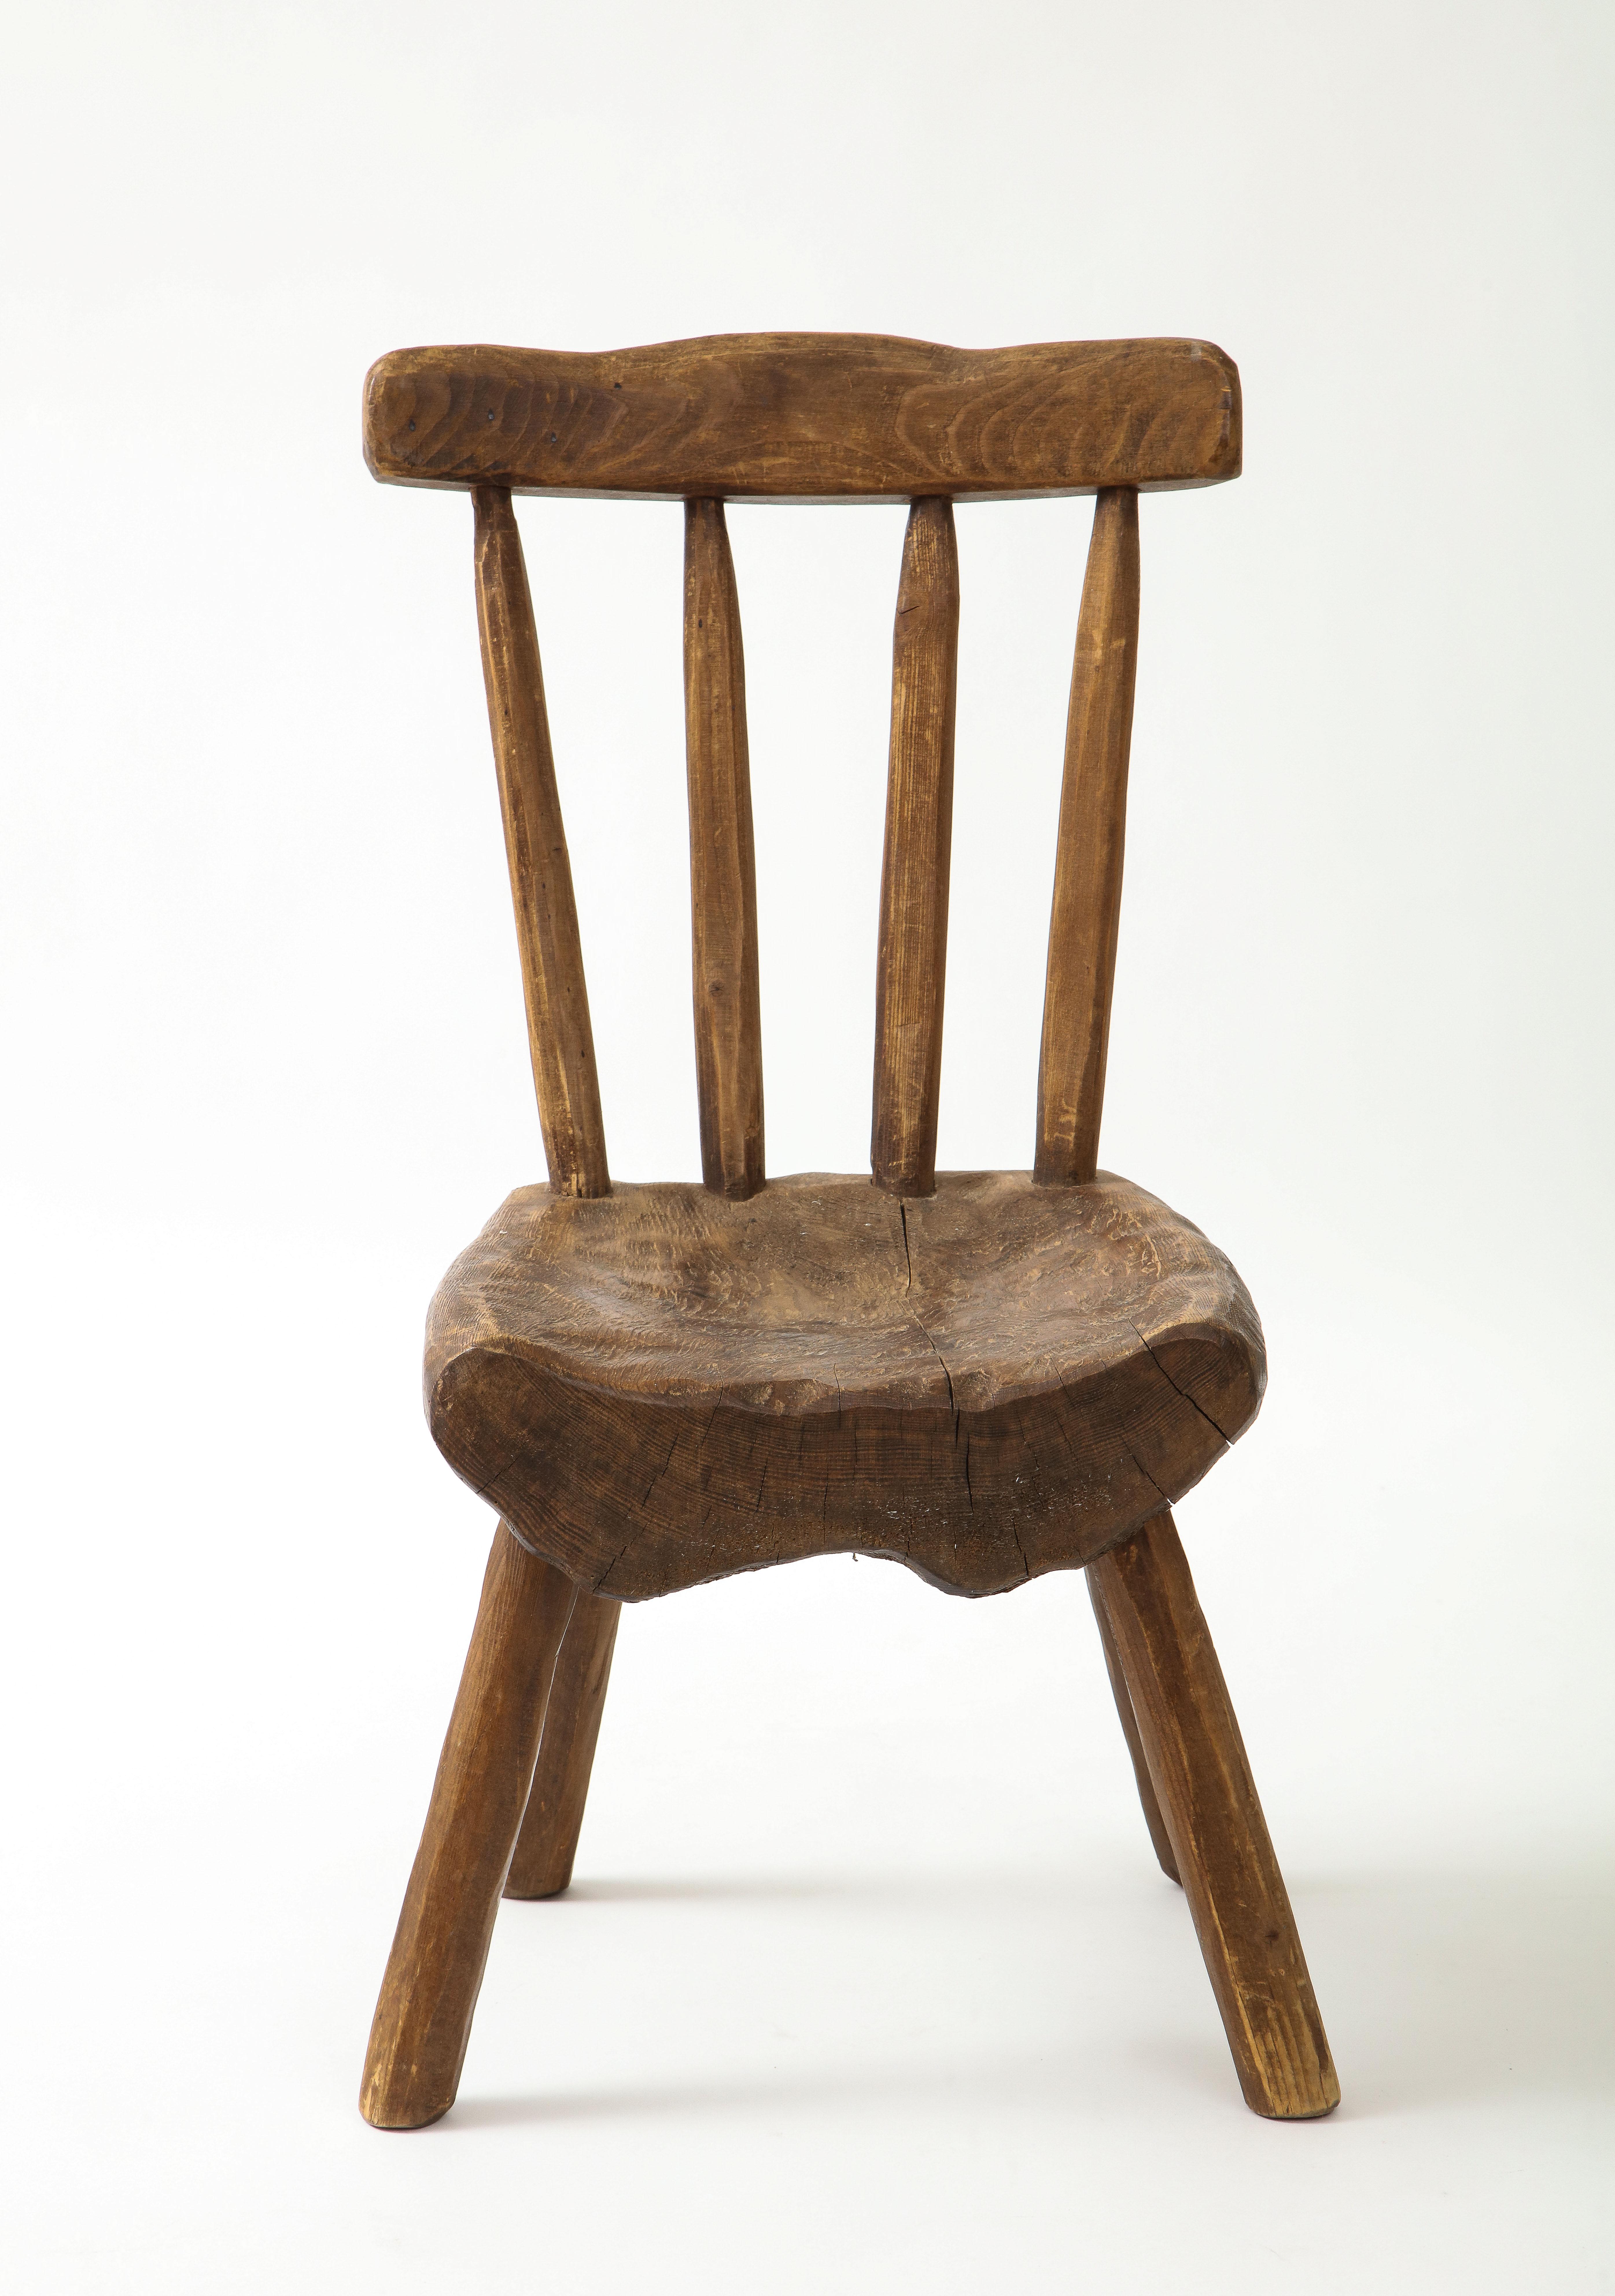 Folk Art low chair / stool, Dug-out seat, handmade.